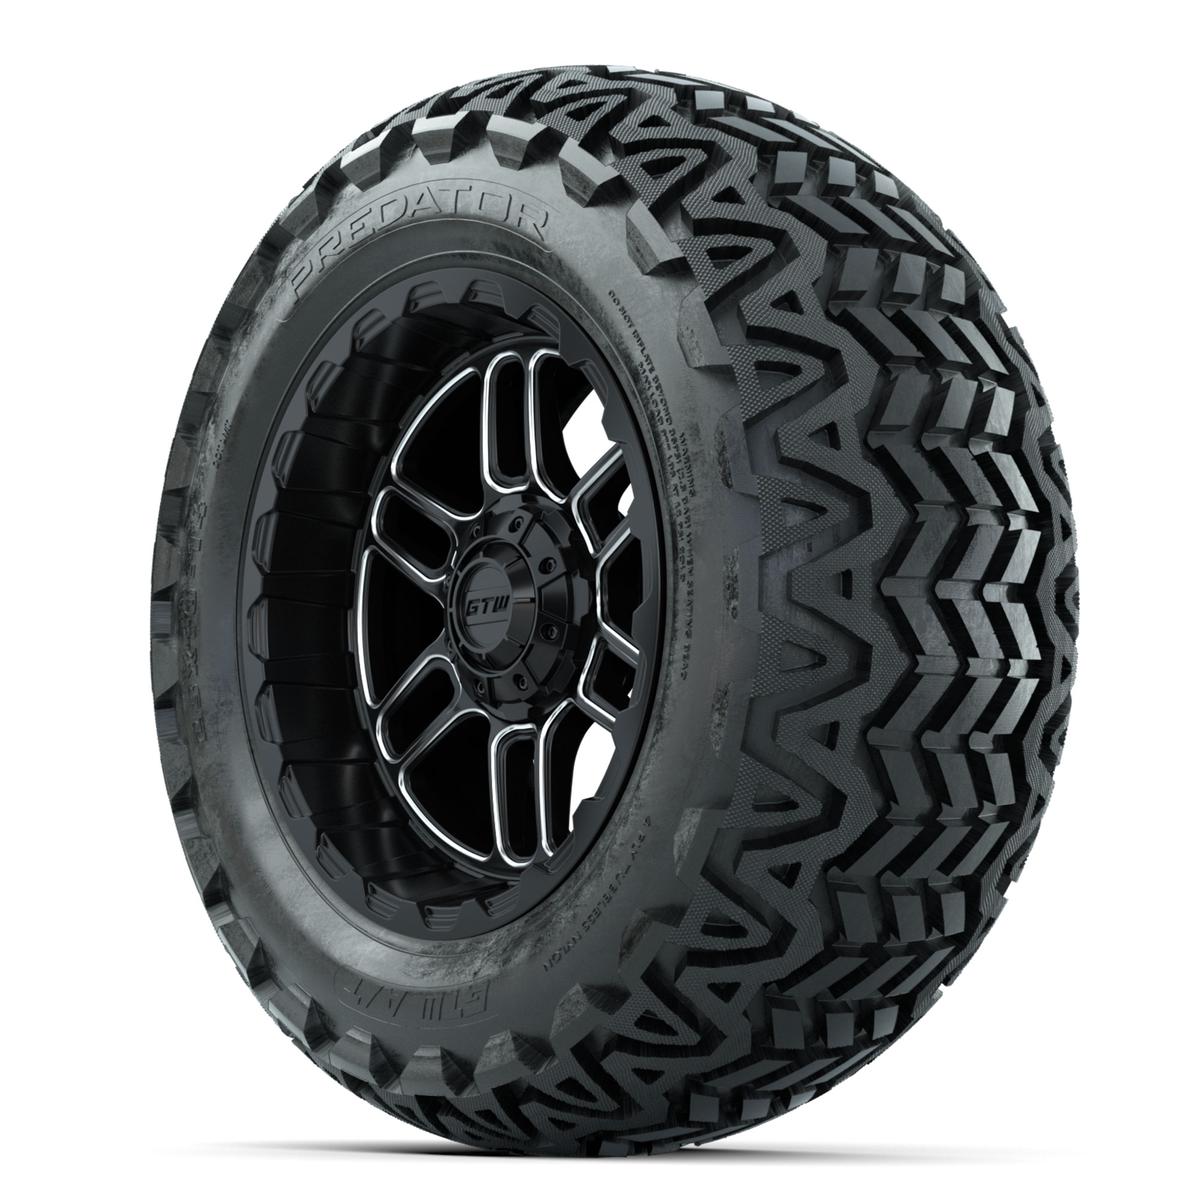 Set of (4) 14 in GTW® Titan Machined & Black Wheels with 23x10-14 Predator All-Terrain Tires